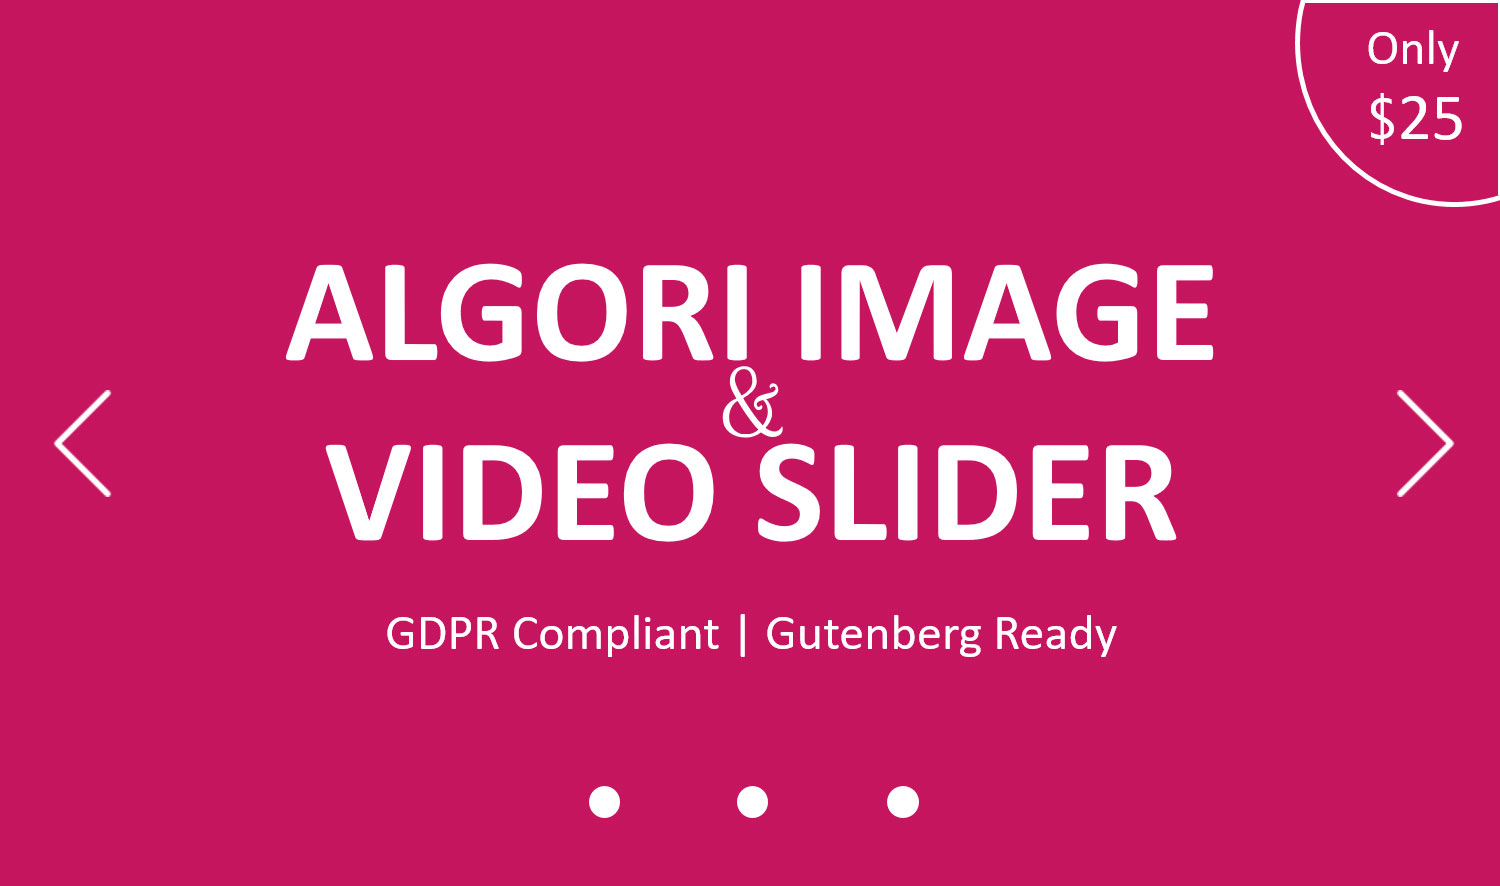 Algori Image & Video Slider Pro for WordPress Gutenberg